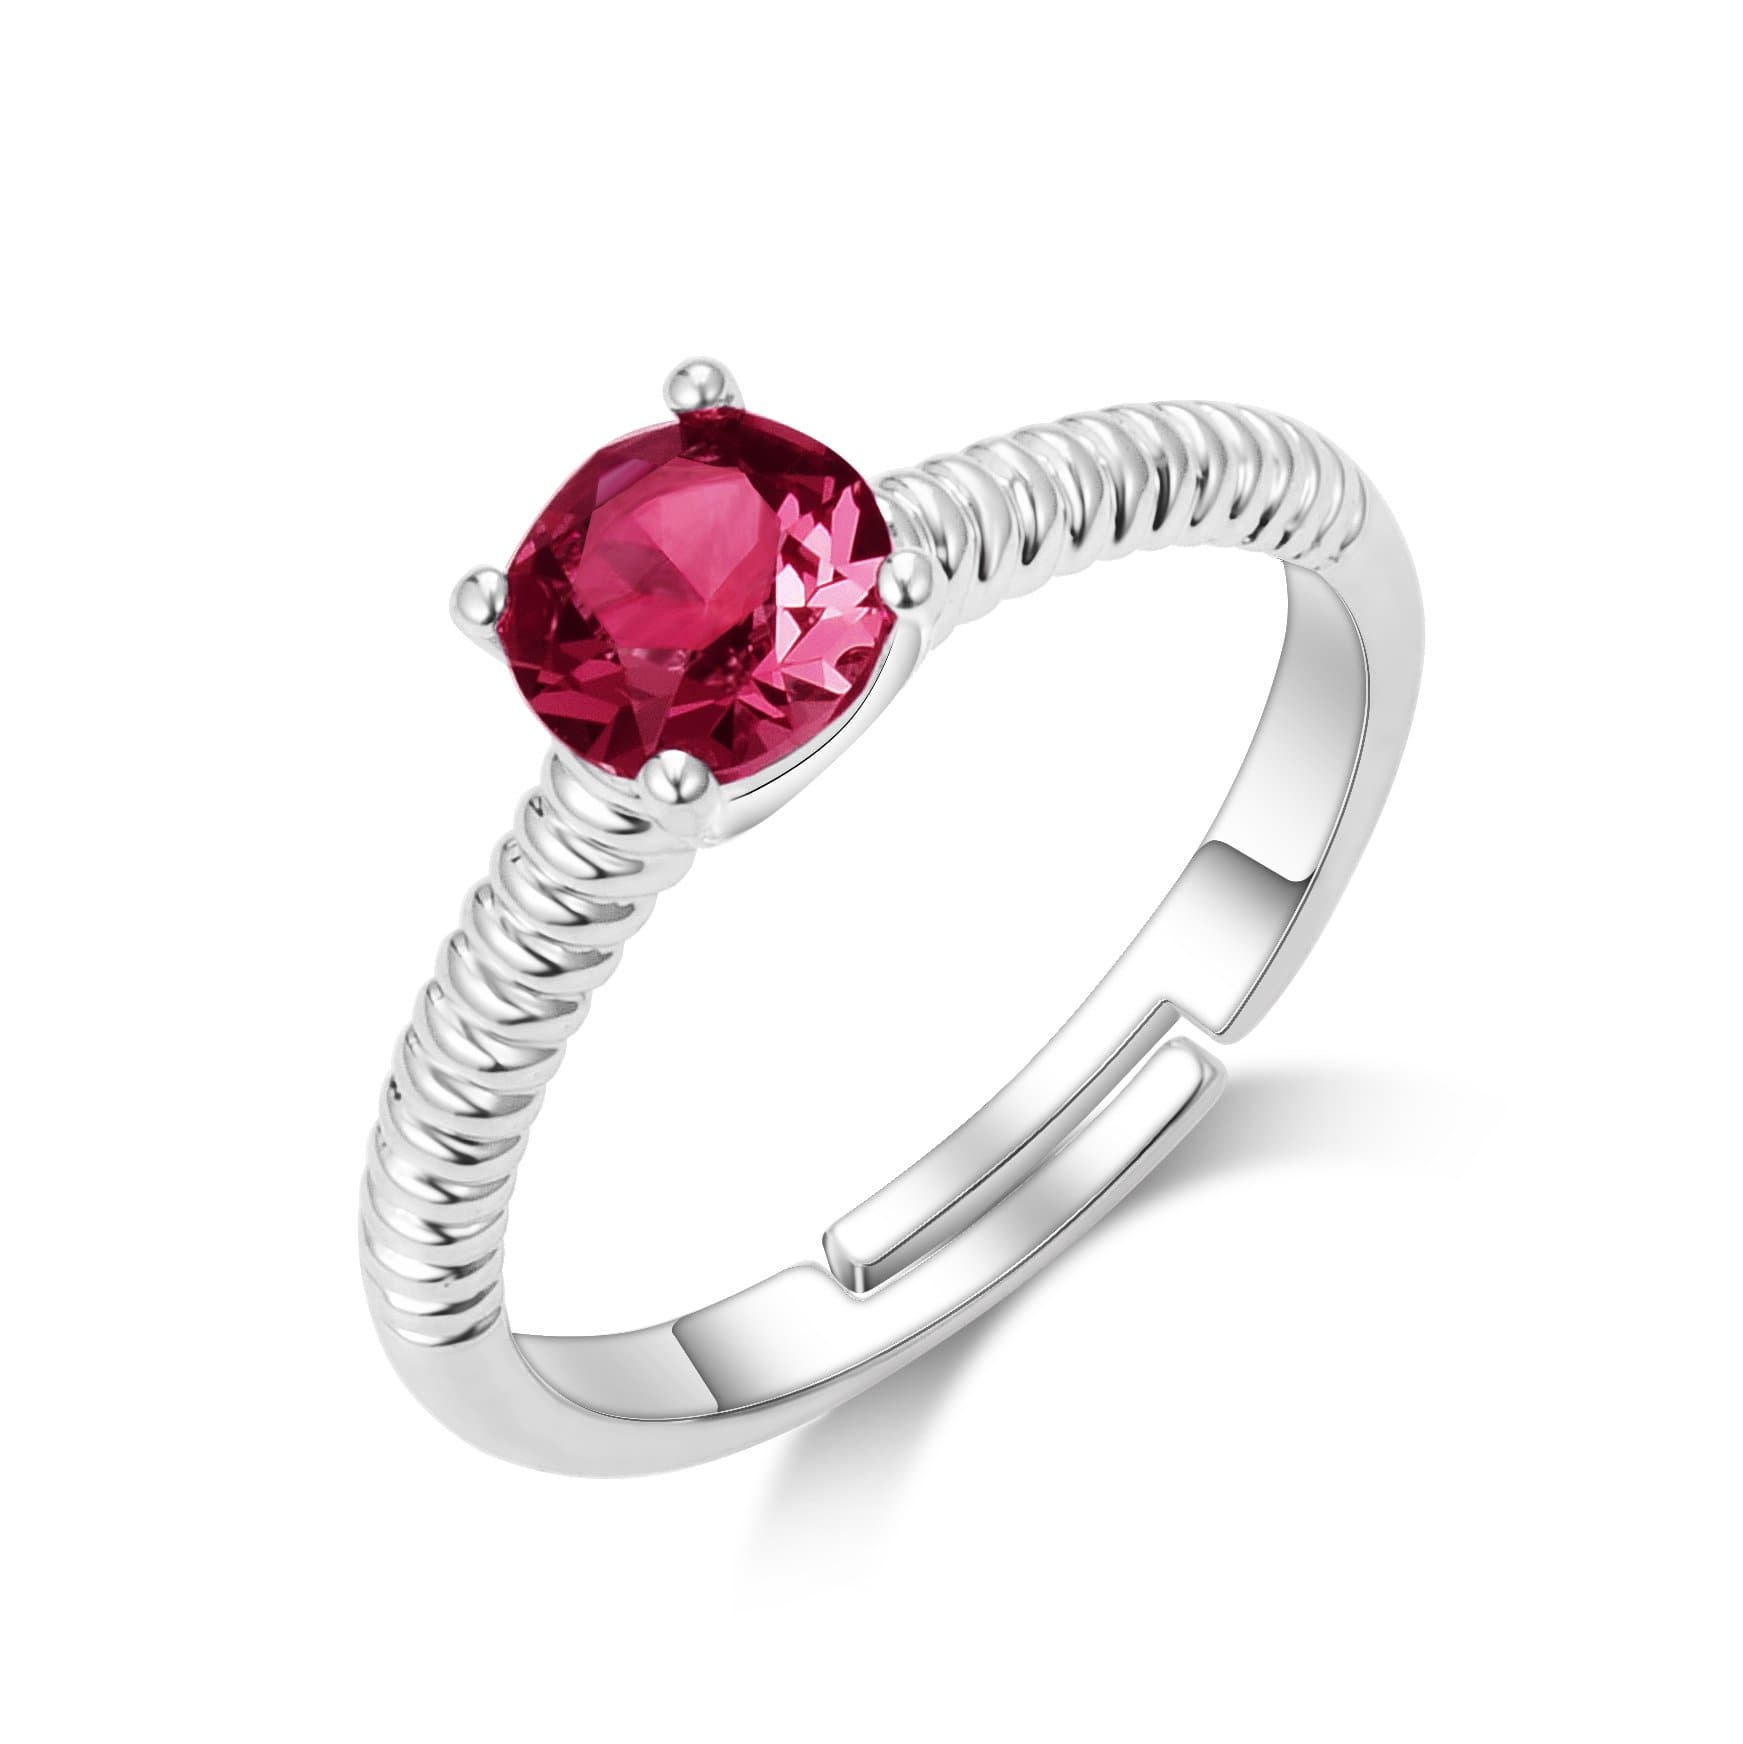 Dark Red Adjustable Crystal Ring Created with Zircondia® Crystals by Philip Jones Jewellery